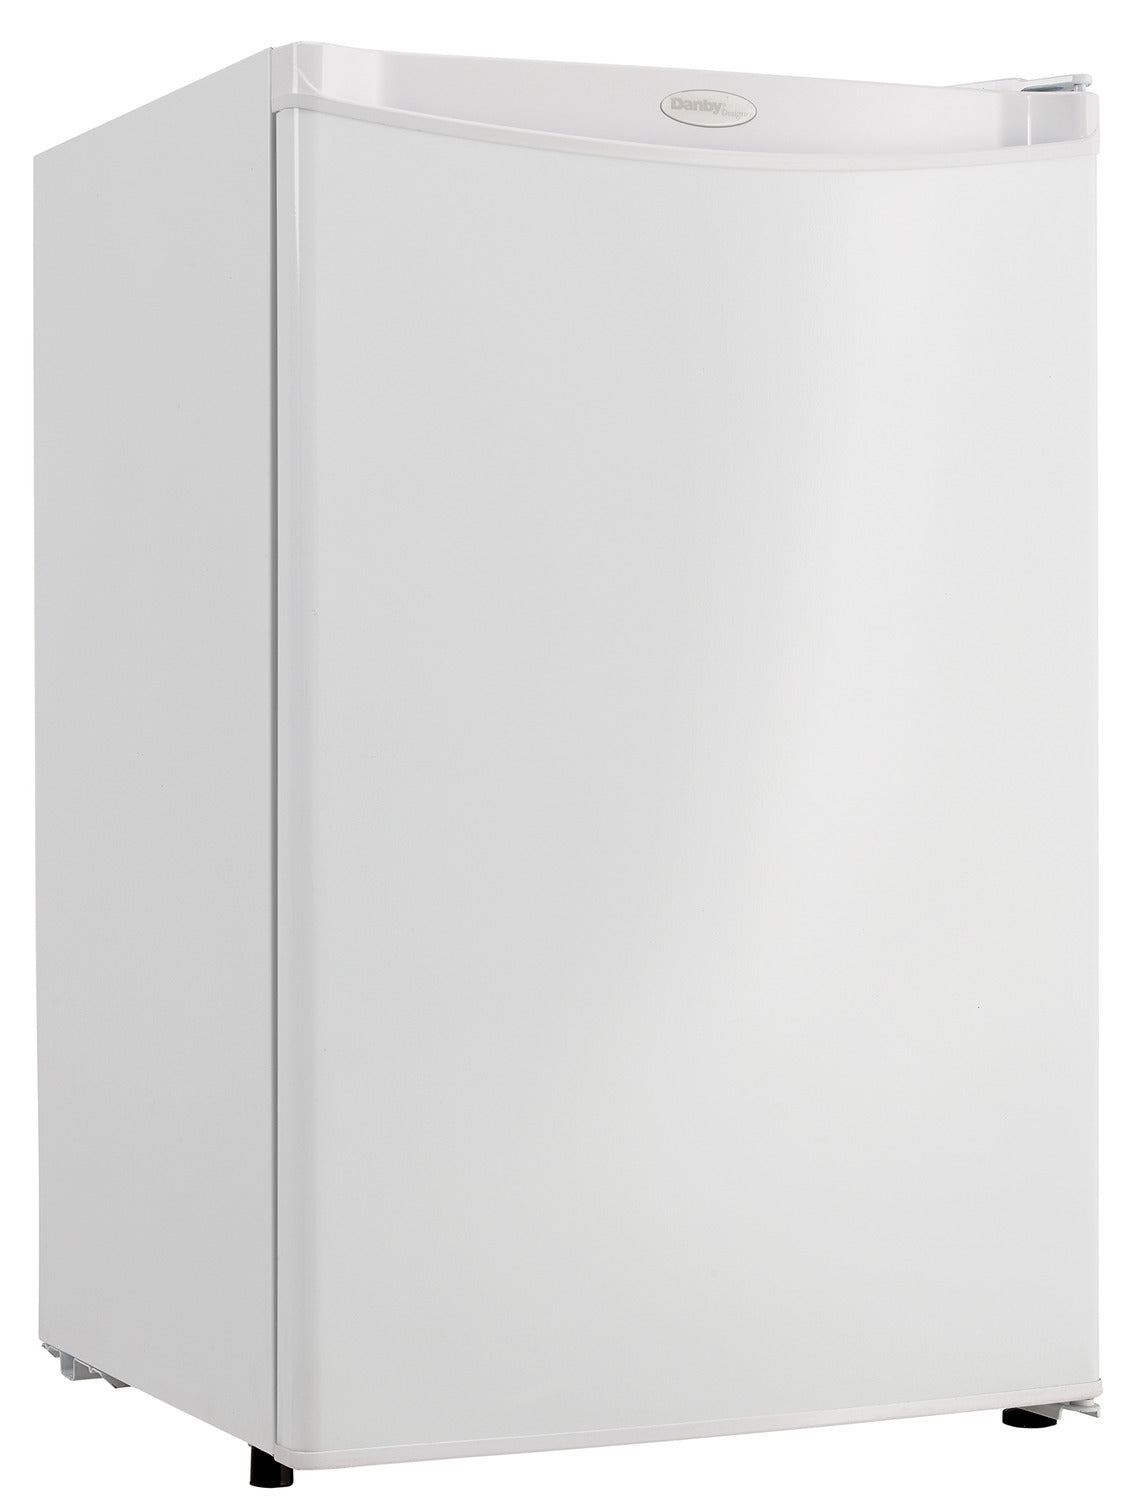 Danby White Compact Refrigerator (4.4 Cu. Ft.) - DAR044A4WDD